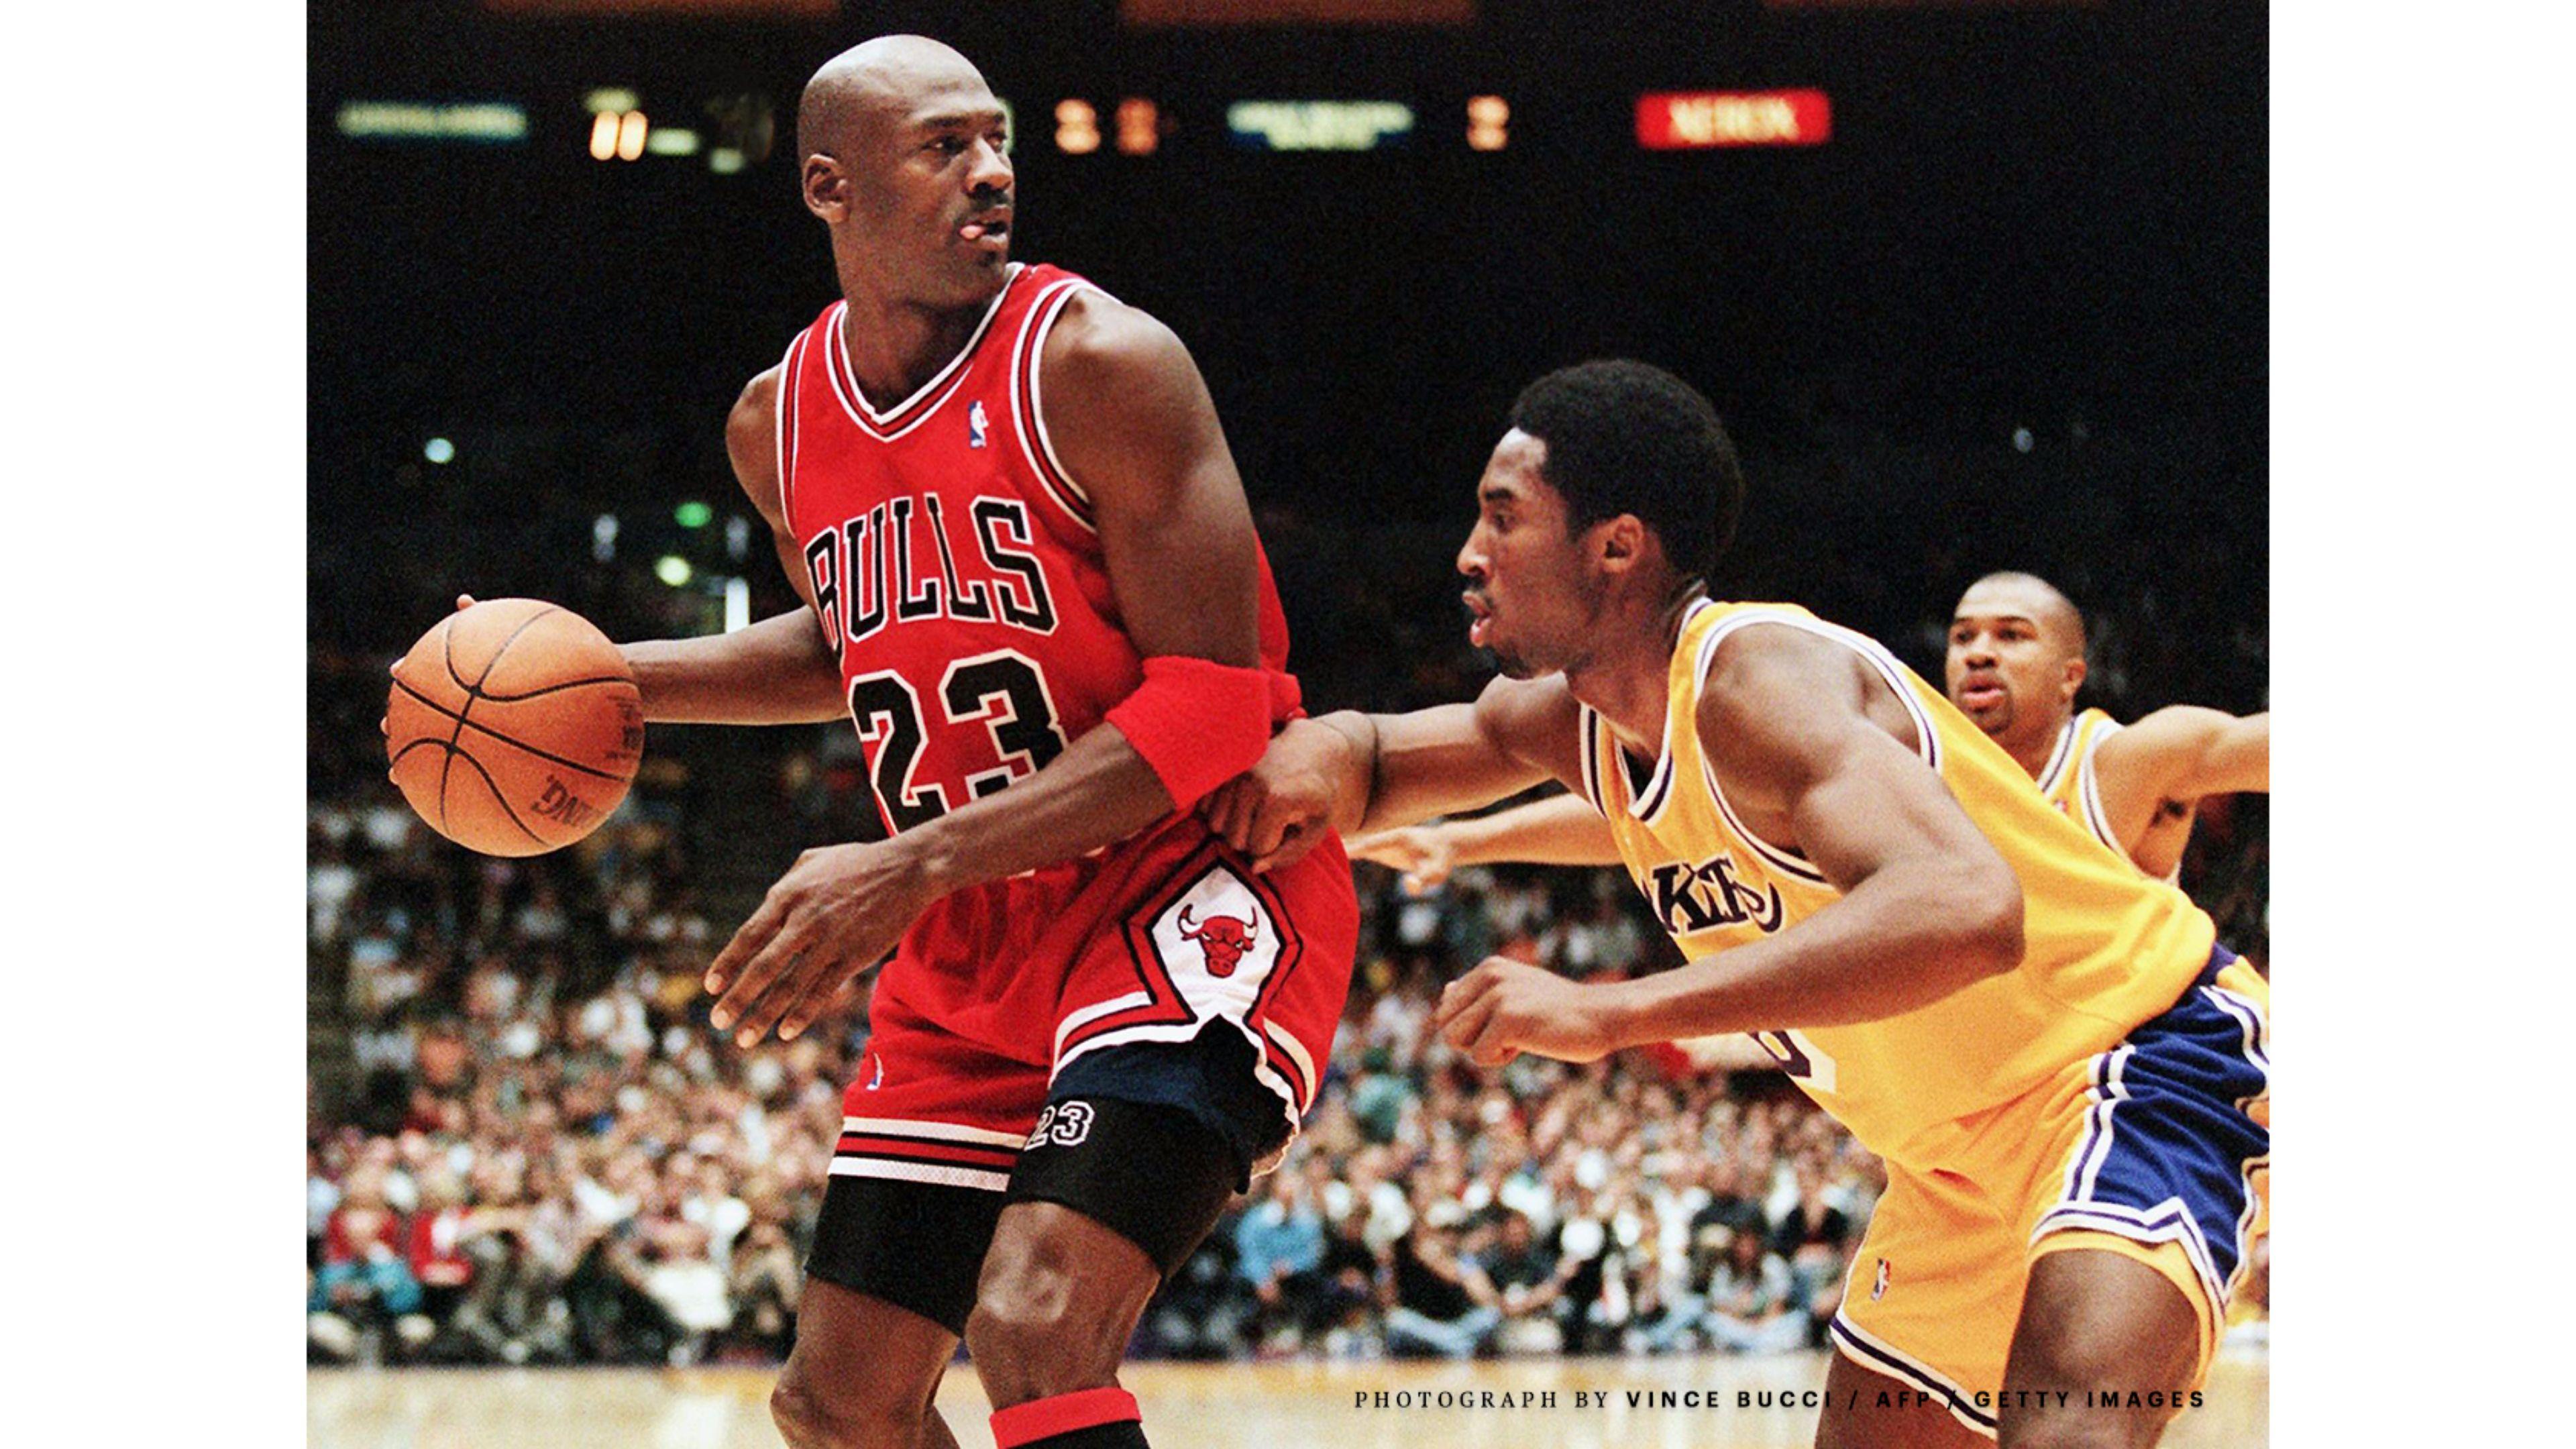 Kobe Bryant Michael Jordan Basketball Wallpapers  Free download and  software reviews  CNET Download